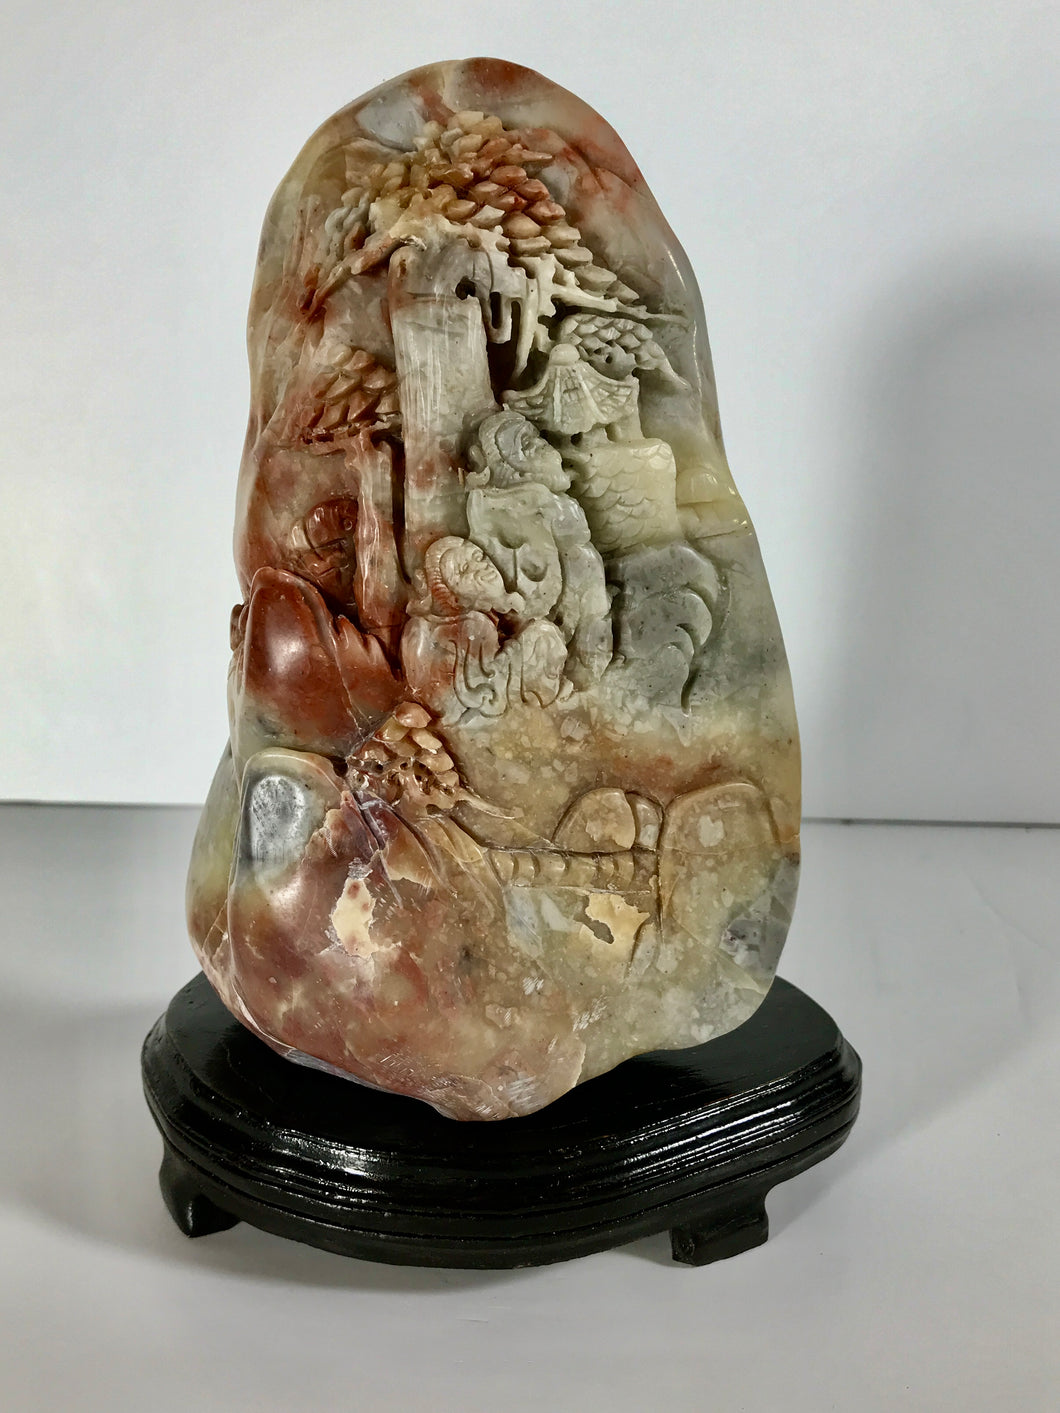 VIntage Soapstone Pebble carved as Scholar Rock